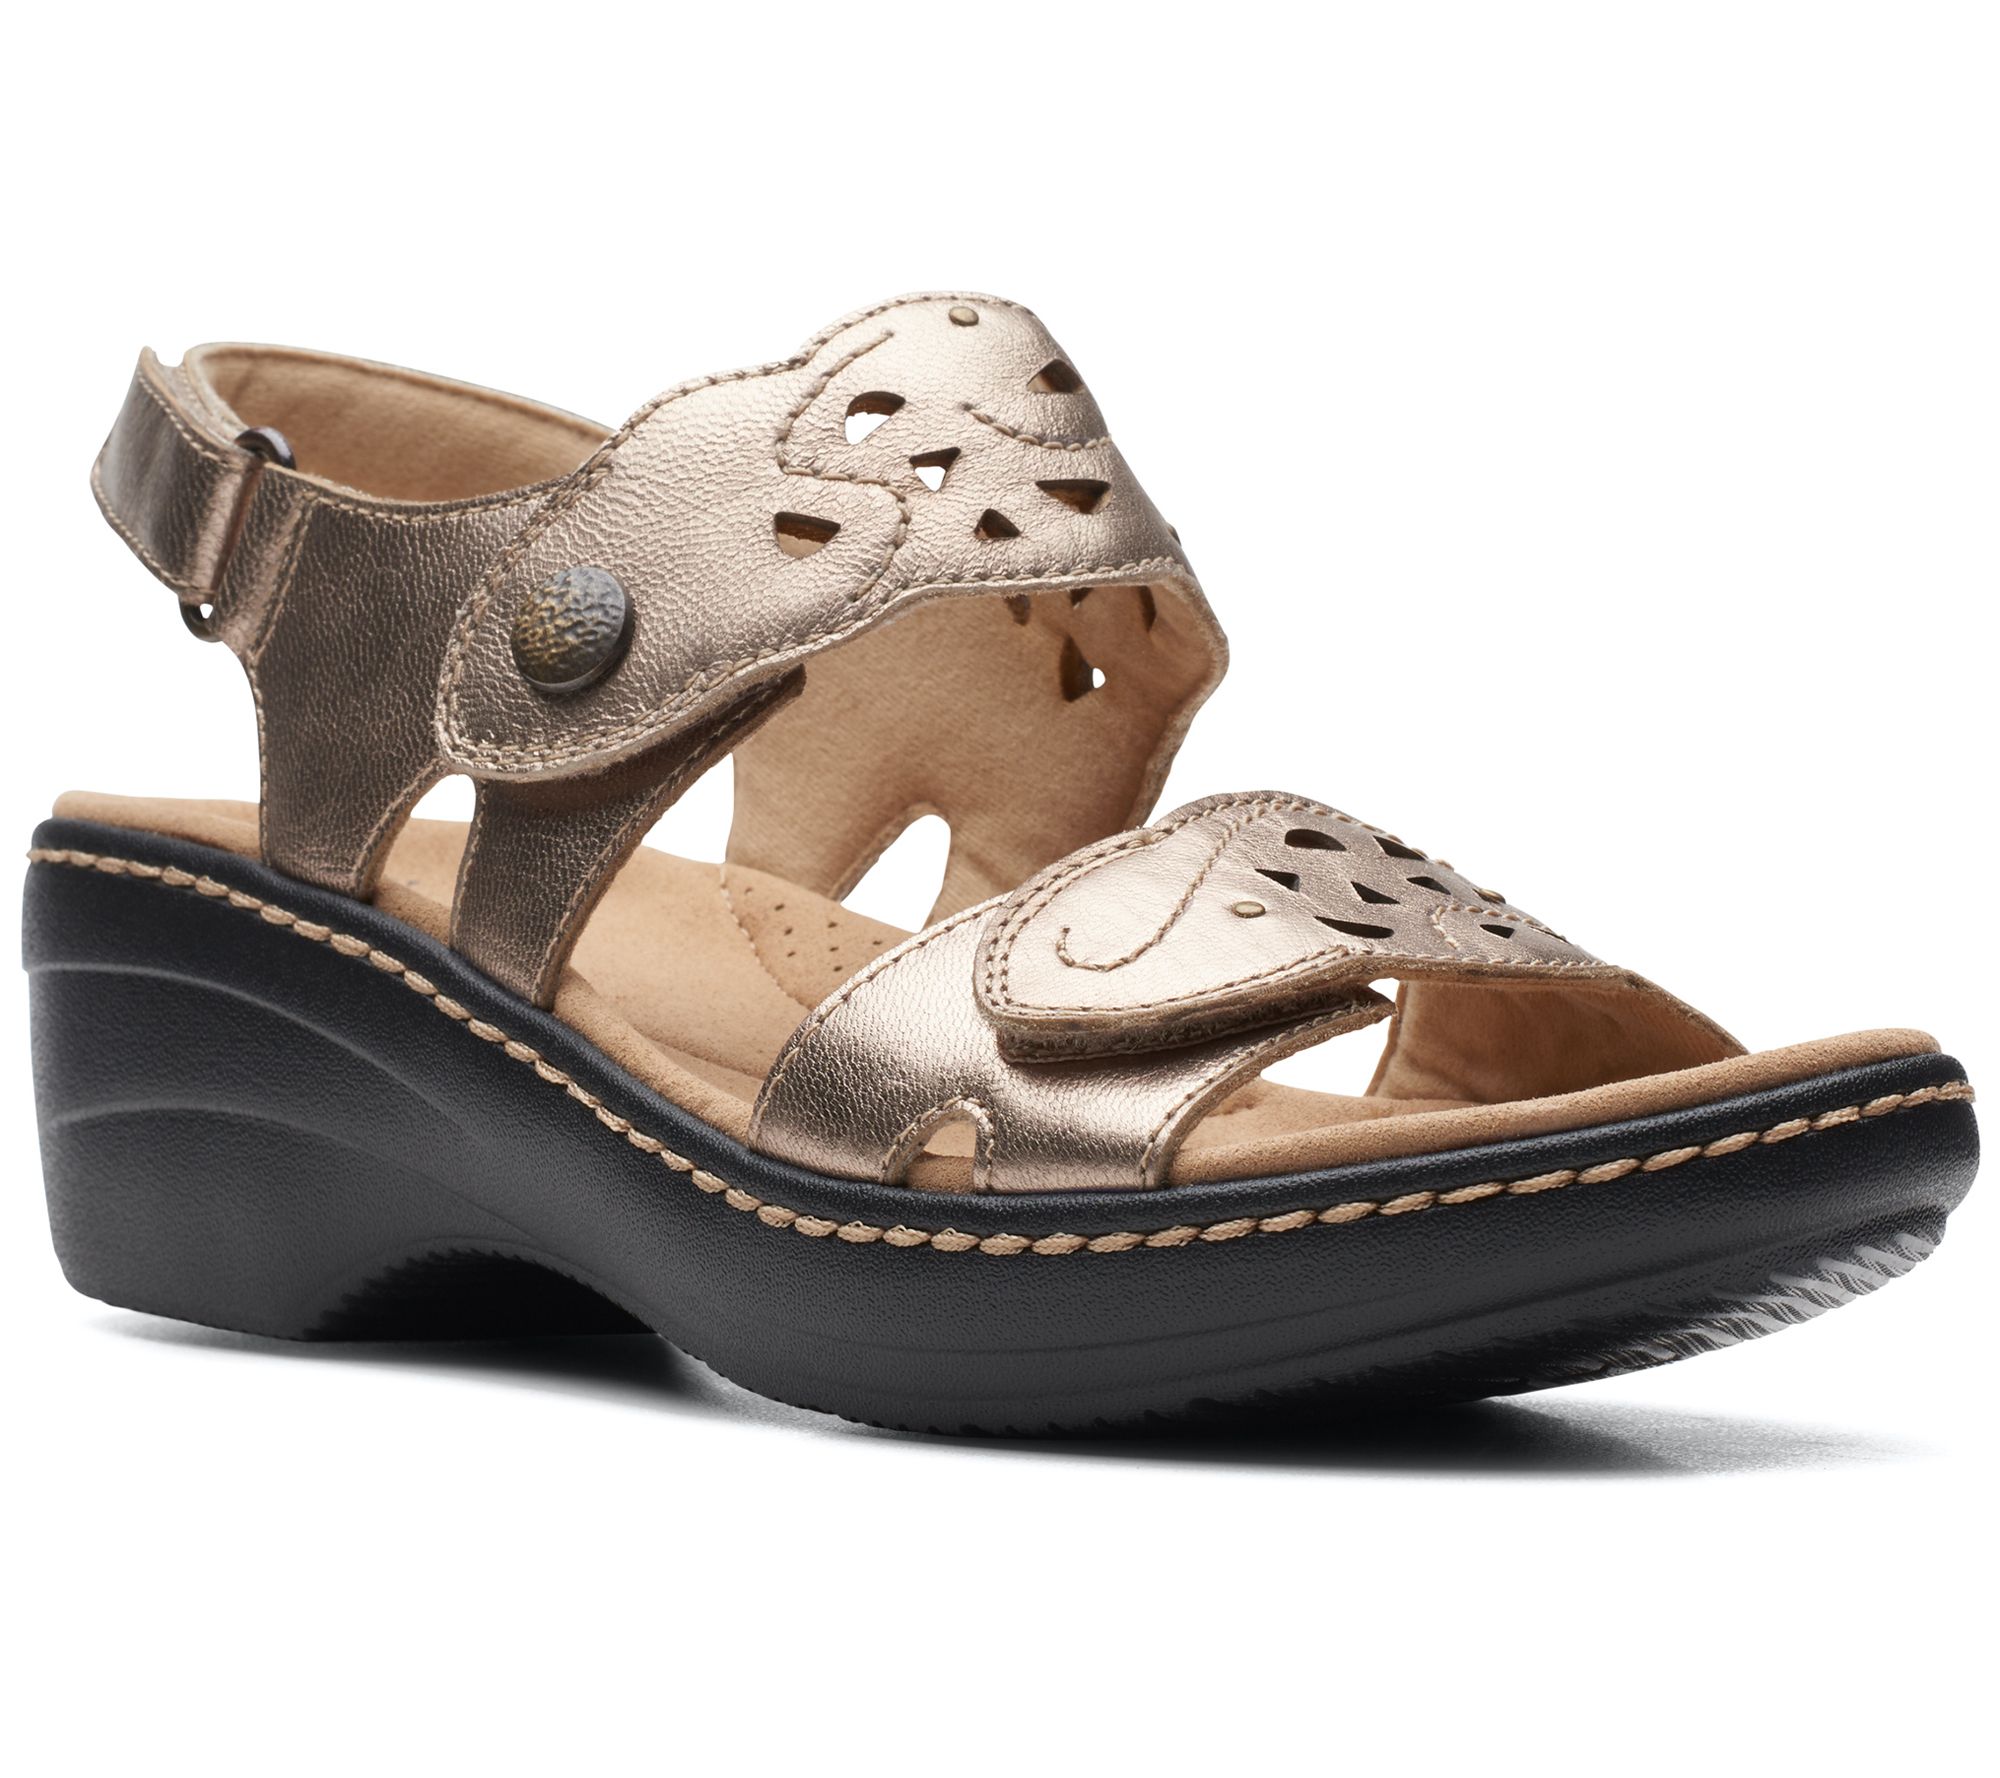 Clark Ladies Sandals Cheap Buying, Save 54% | jlcatj.gob.mx